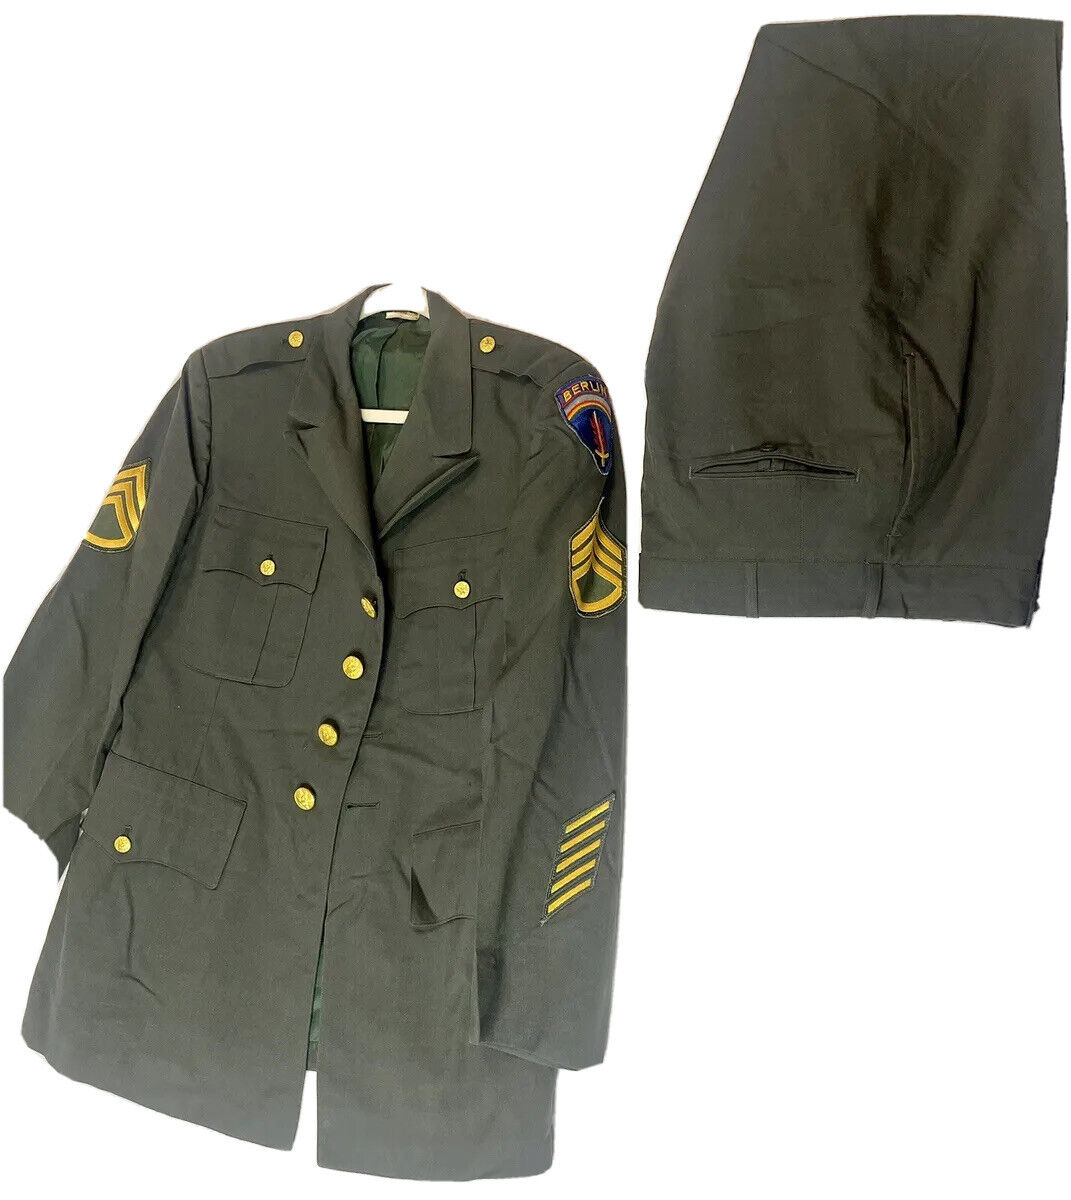 COLD WAR ORG US ARMY STAFF SERGANT BERLIN BRIGADE DRESS UNIFORM PATCHES MILITARY